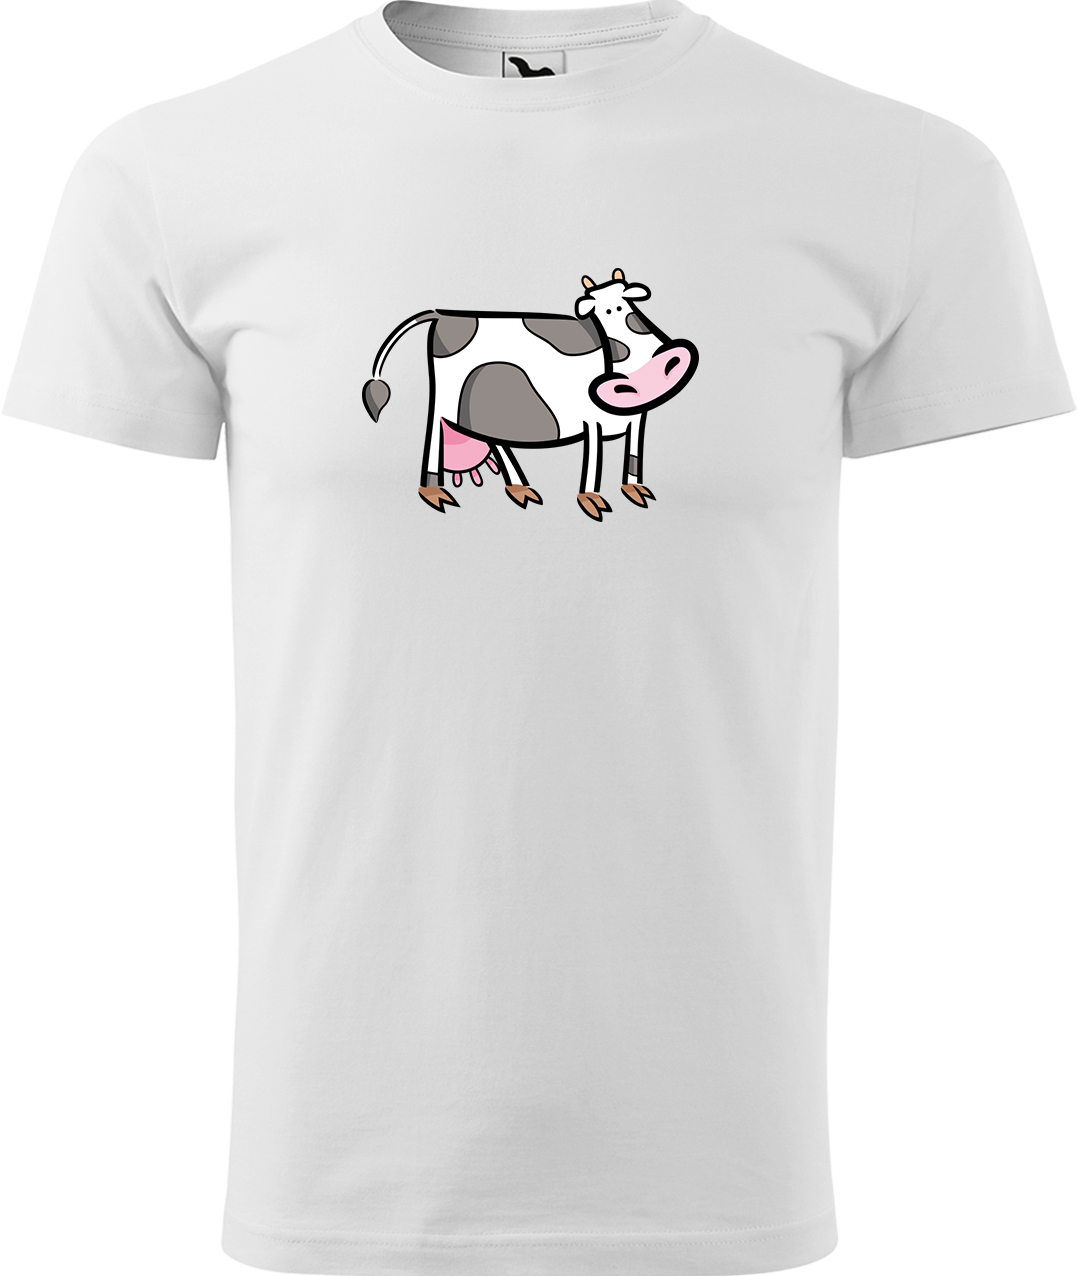 Pánské tričko s krávou - Kravička Velikost: 4XL, Barva: Bílá (00), Střih: pánský